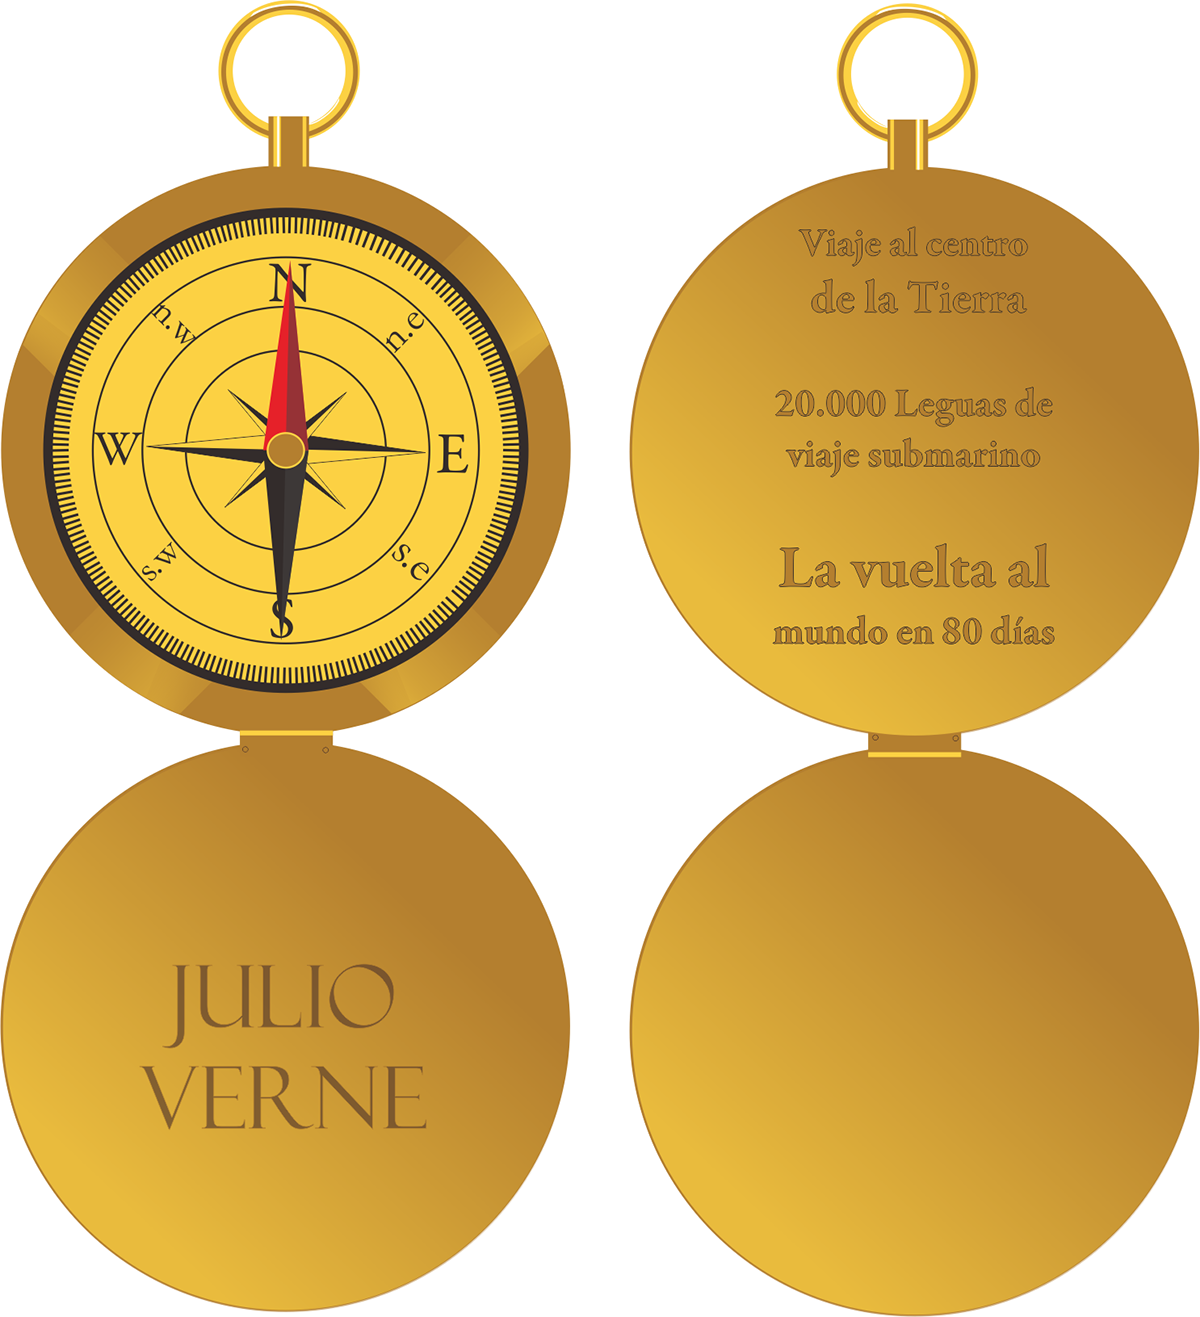 Julio Verne books cover libro tapa EDH señalador diseño gráfico editorial